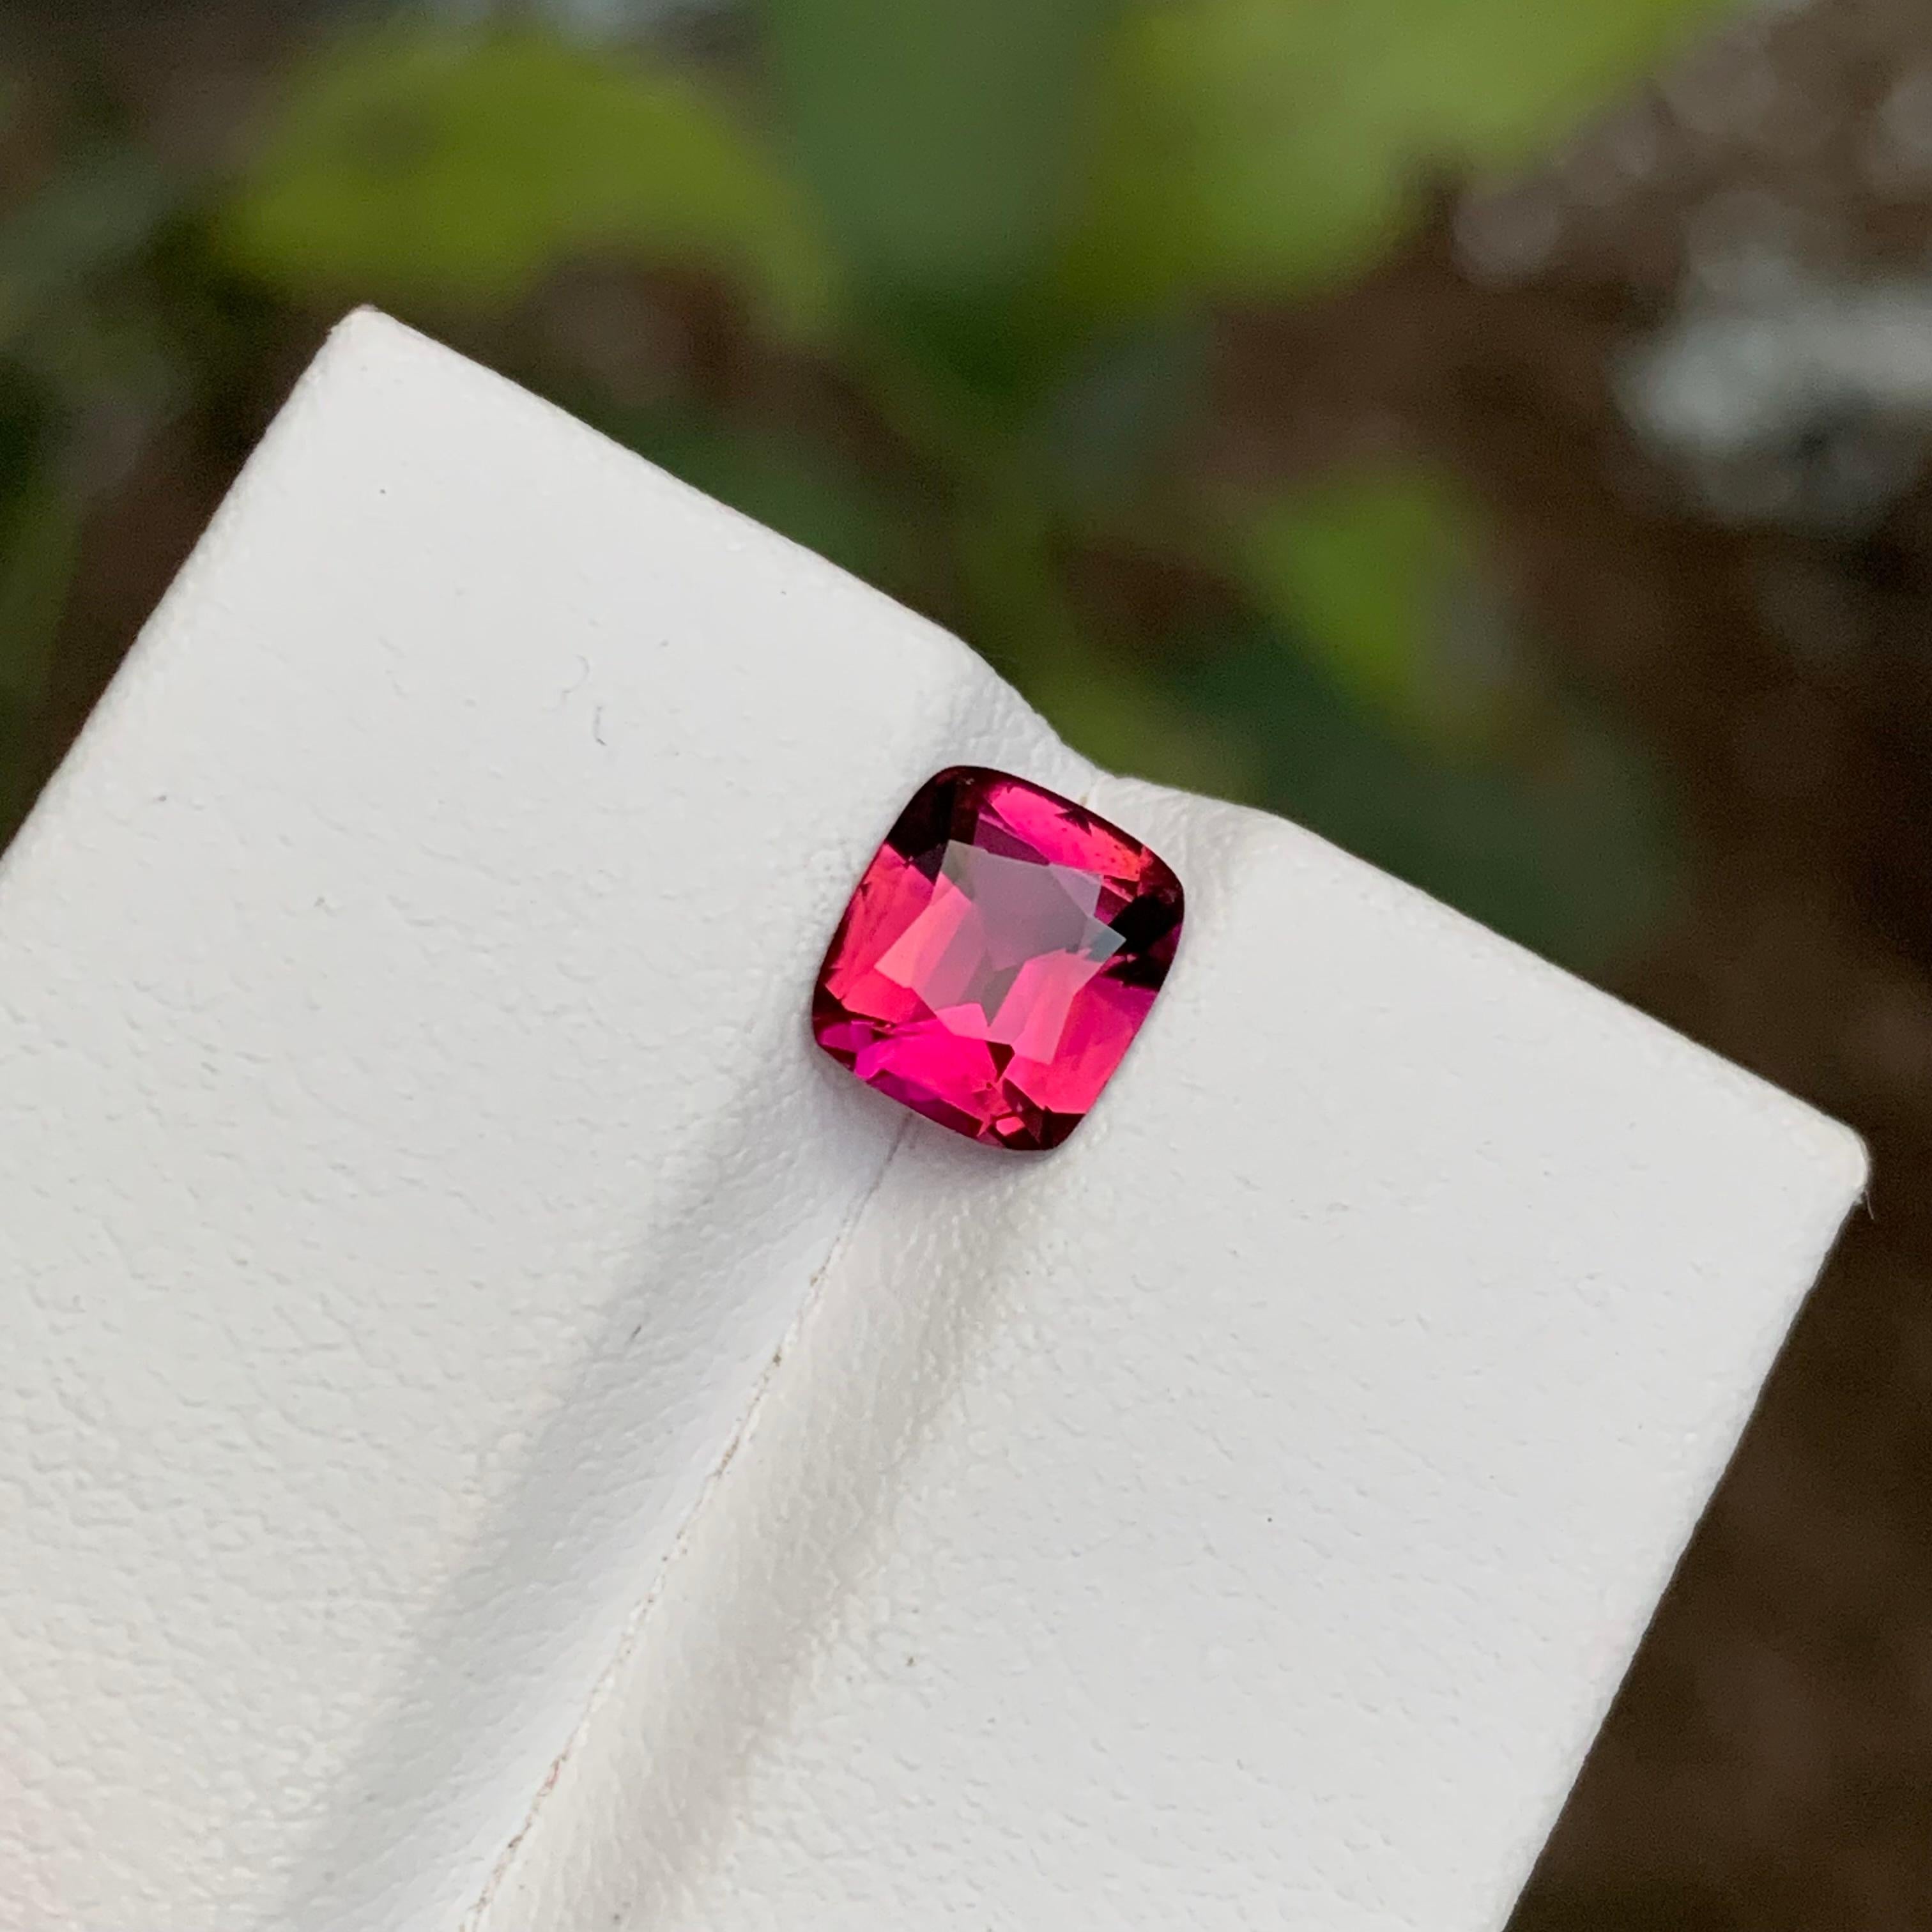 Rare Reddish Pink Rubellite Tourmaline Gemstone, 1.20 Ct Cushion Cut for Ring For Sale 6